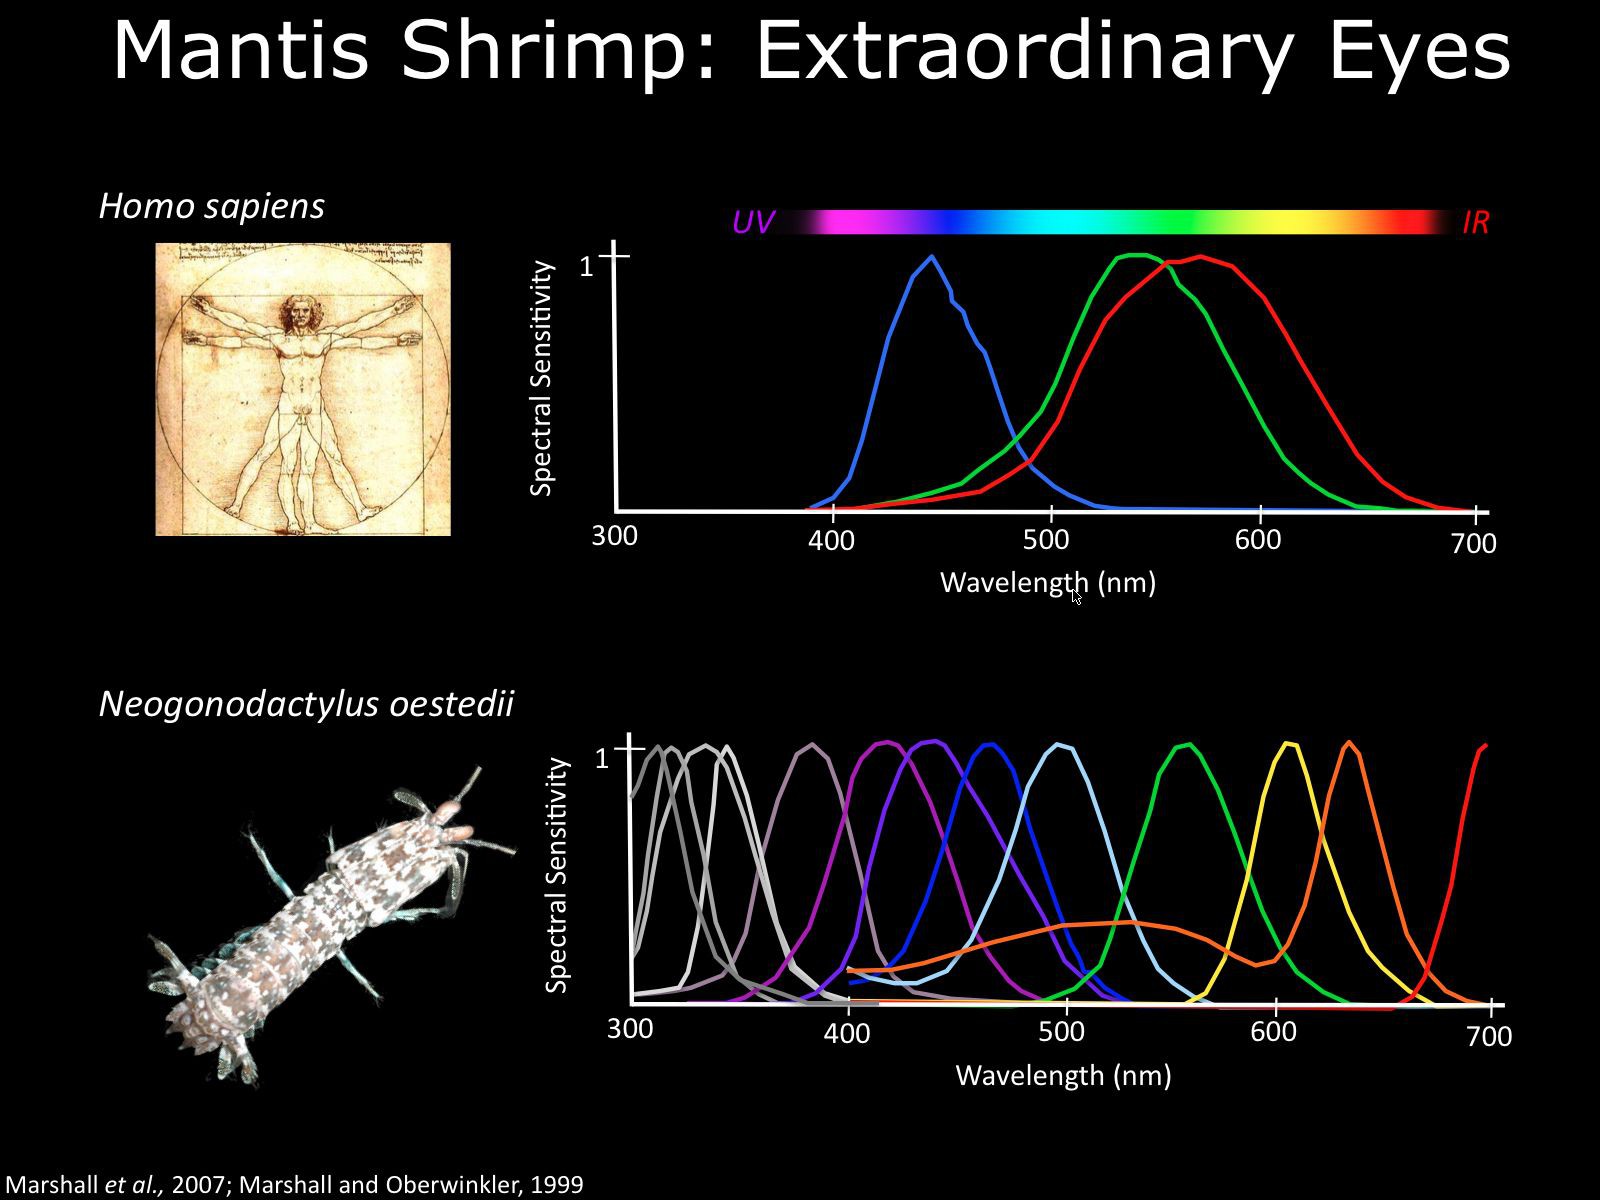 Mantis Shrimp Natural Psychedelic Vision and Awesomeness